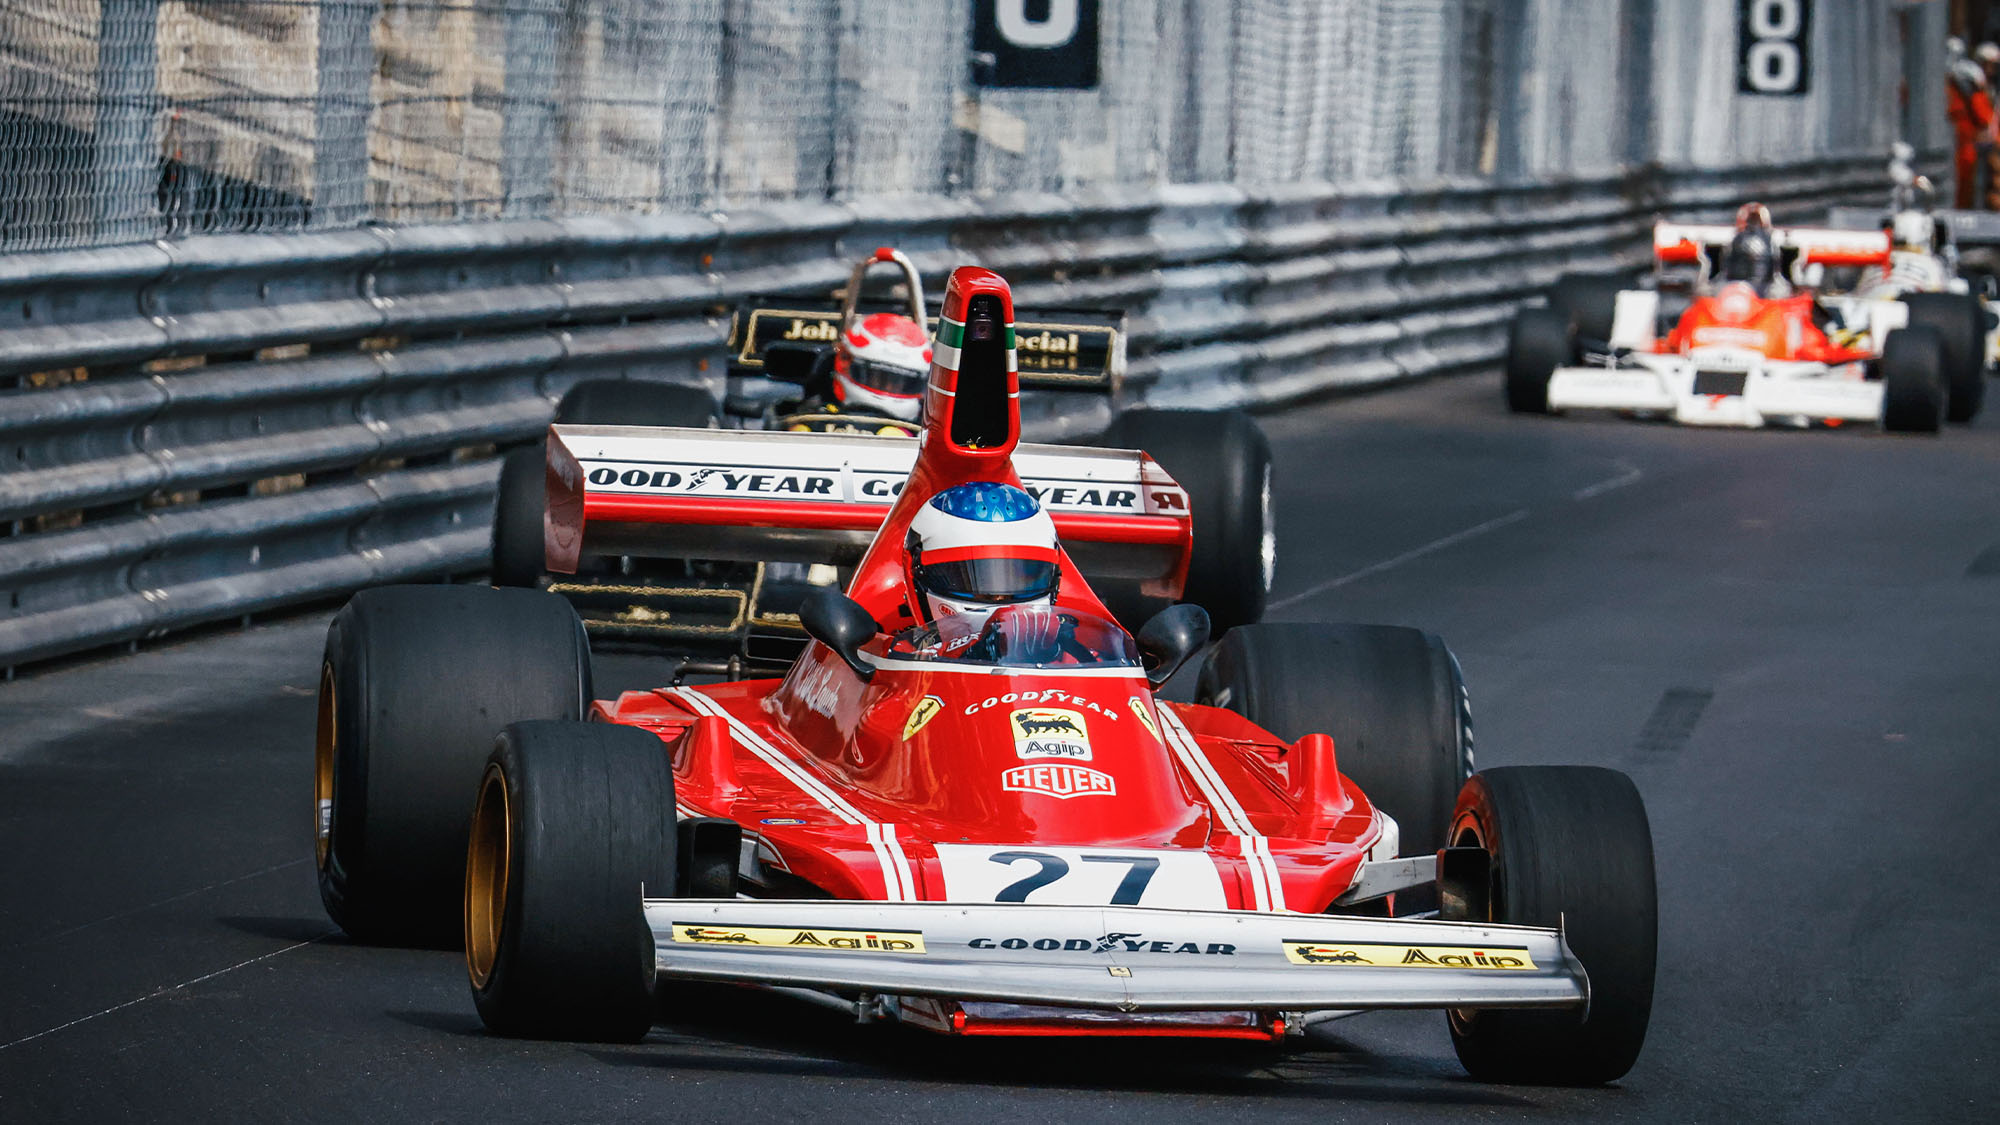 The start of the 2021 Historic Grand Prix of Monaco.